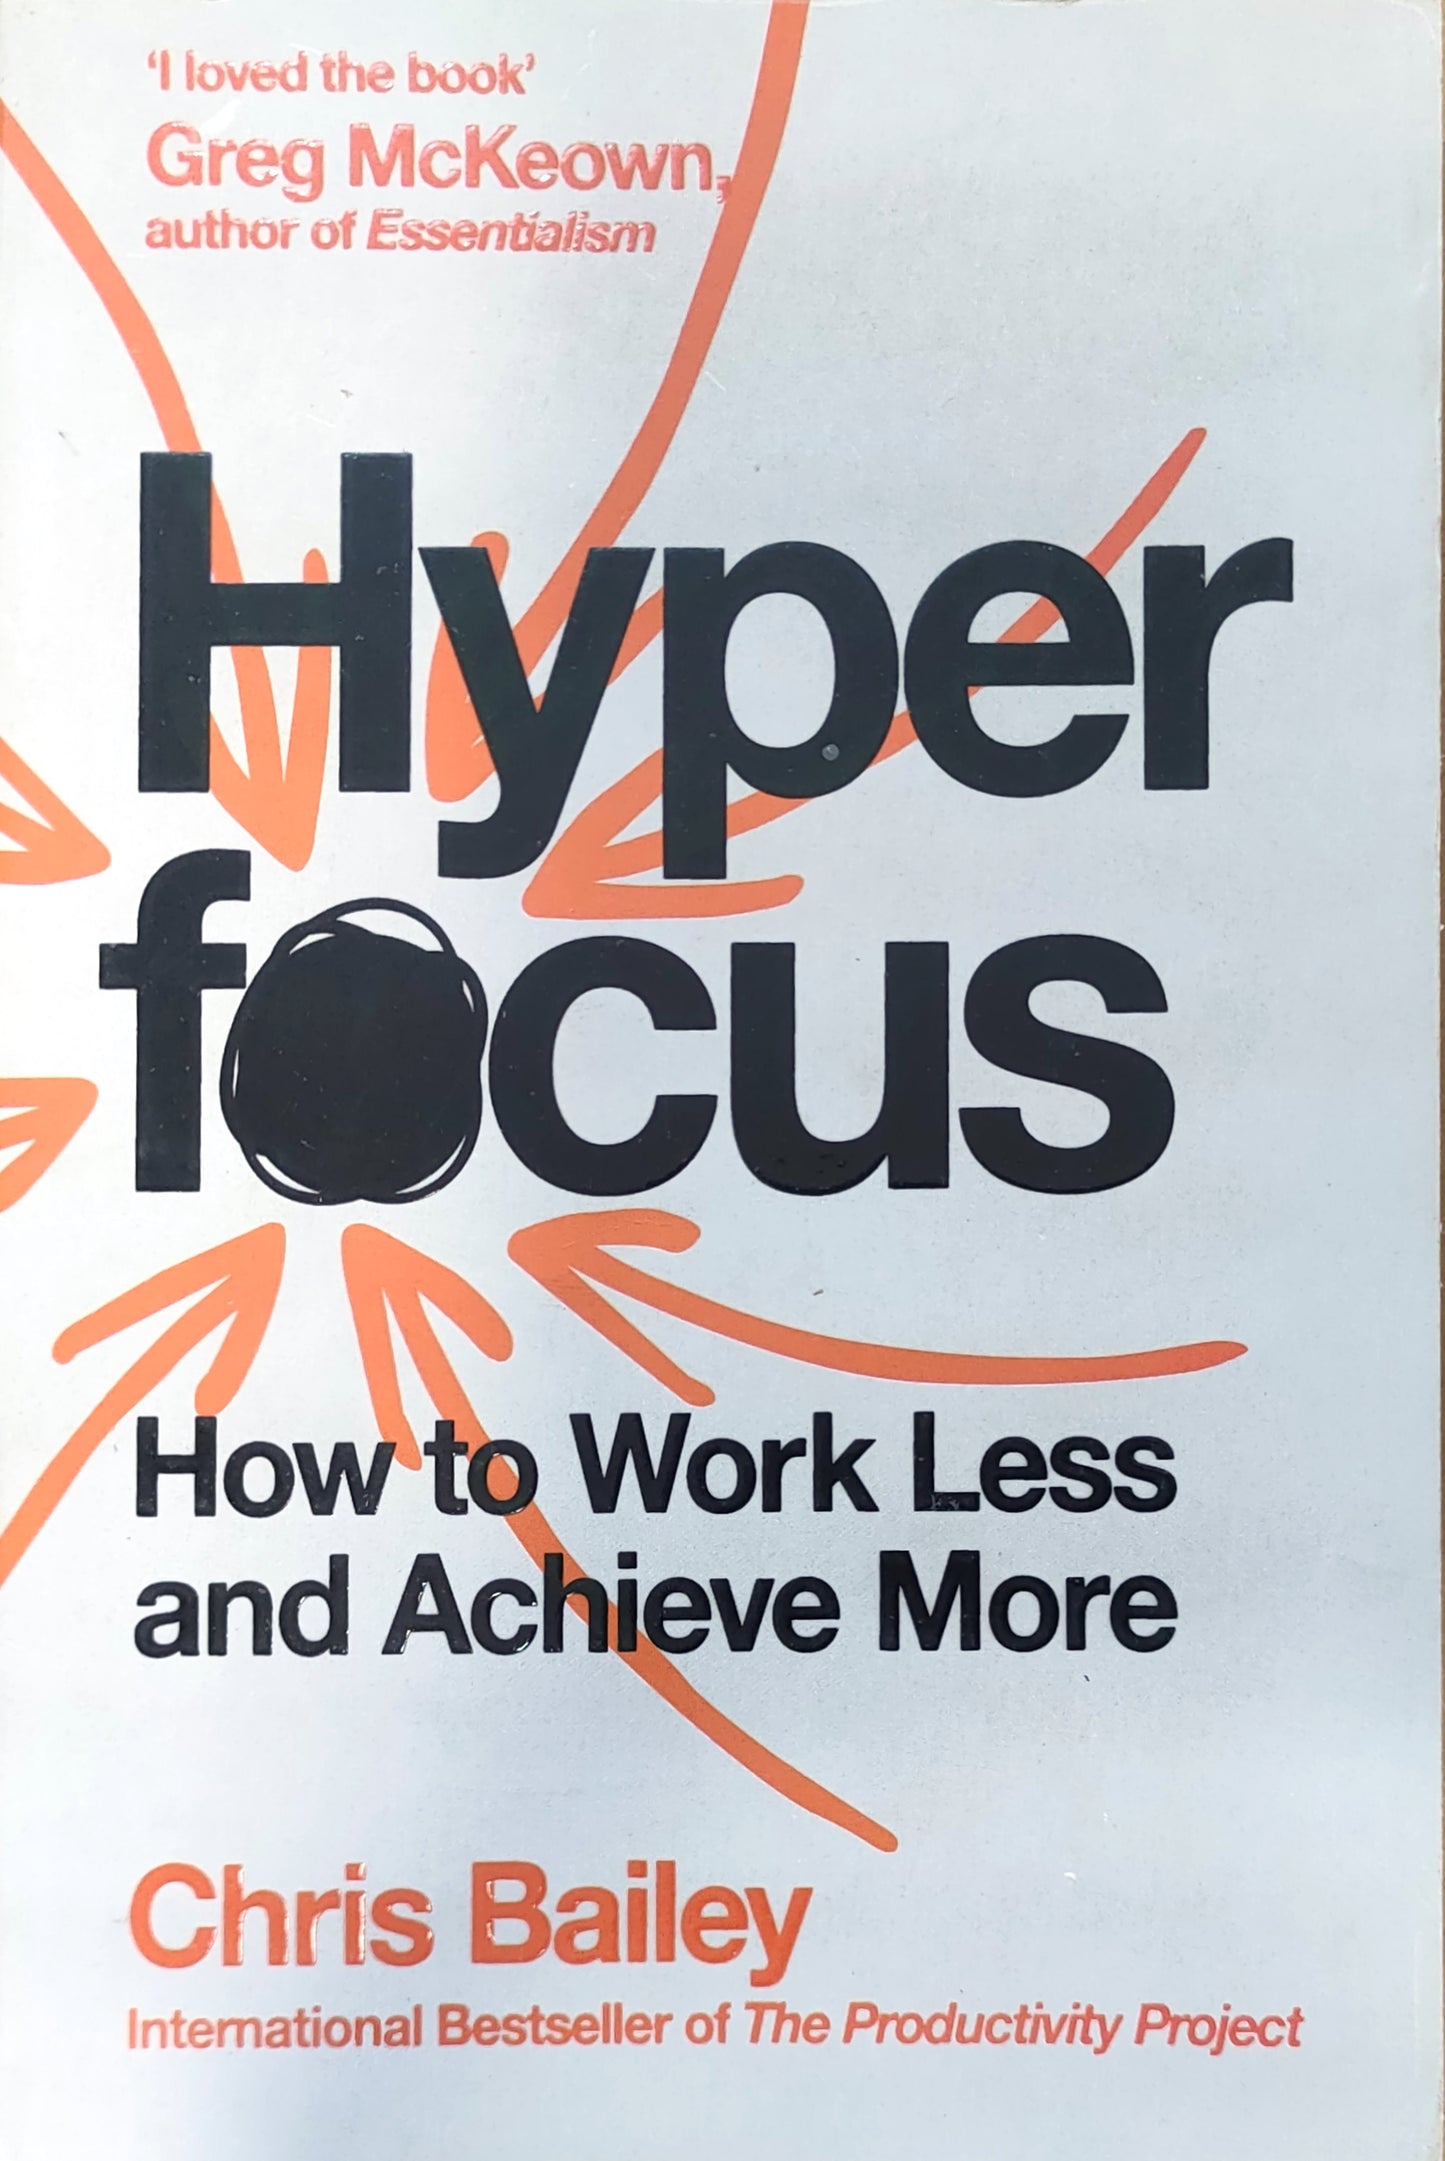 Hyper focus